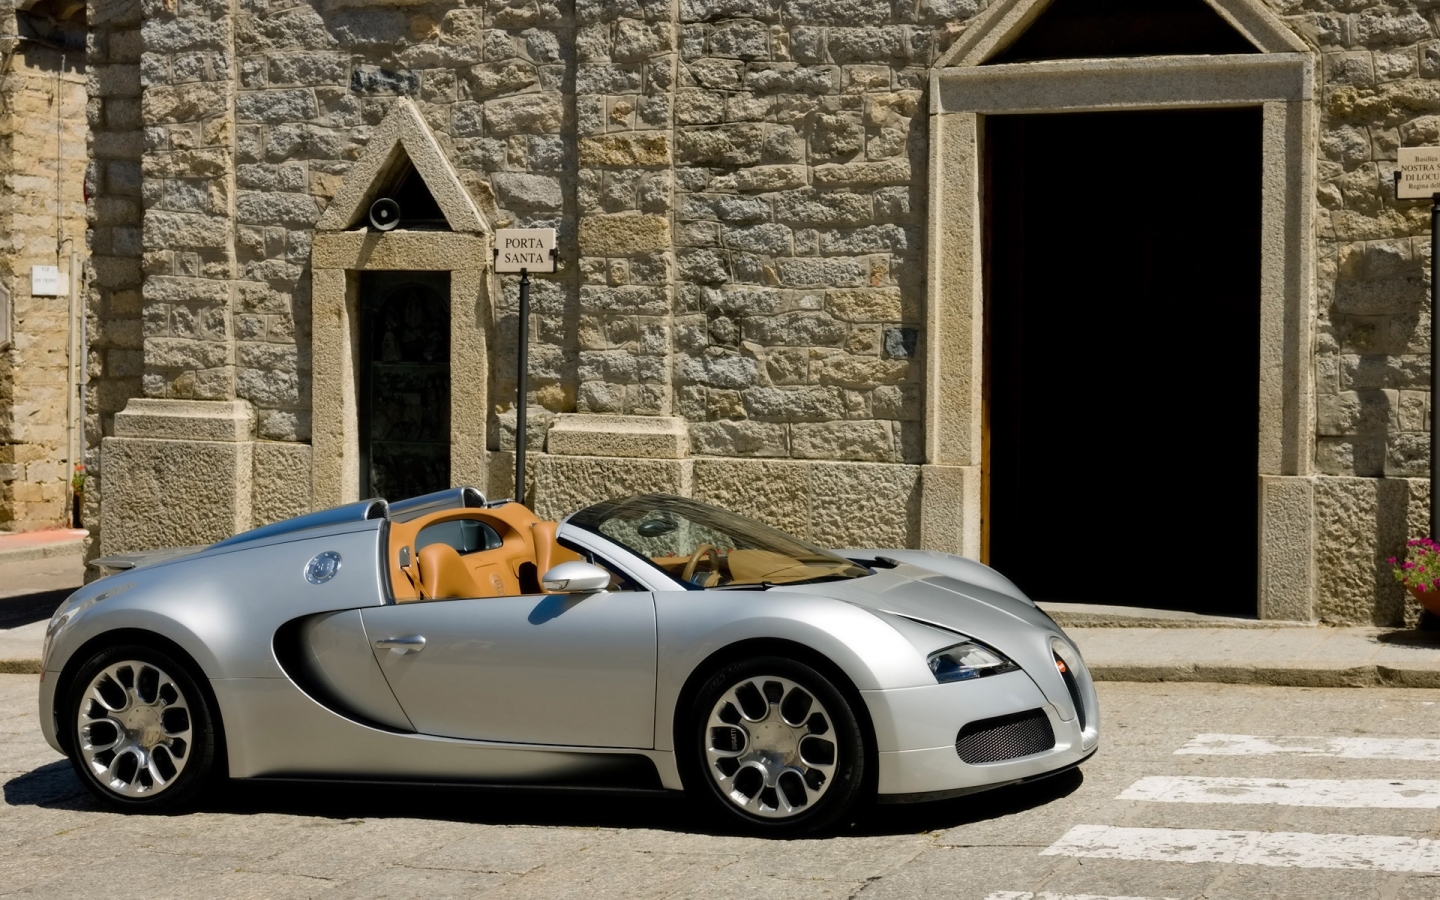 Bugatti Veyron 16.4 Grand Sport 2010 in Sardinia - Side 3 for 1440 x 900 widescreen resolution